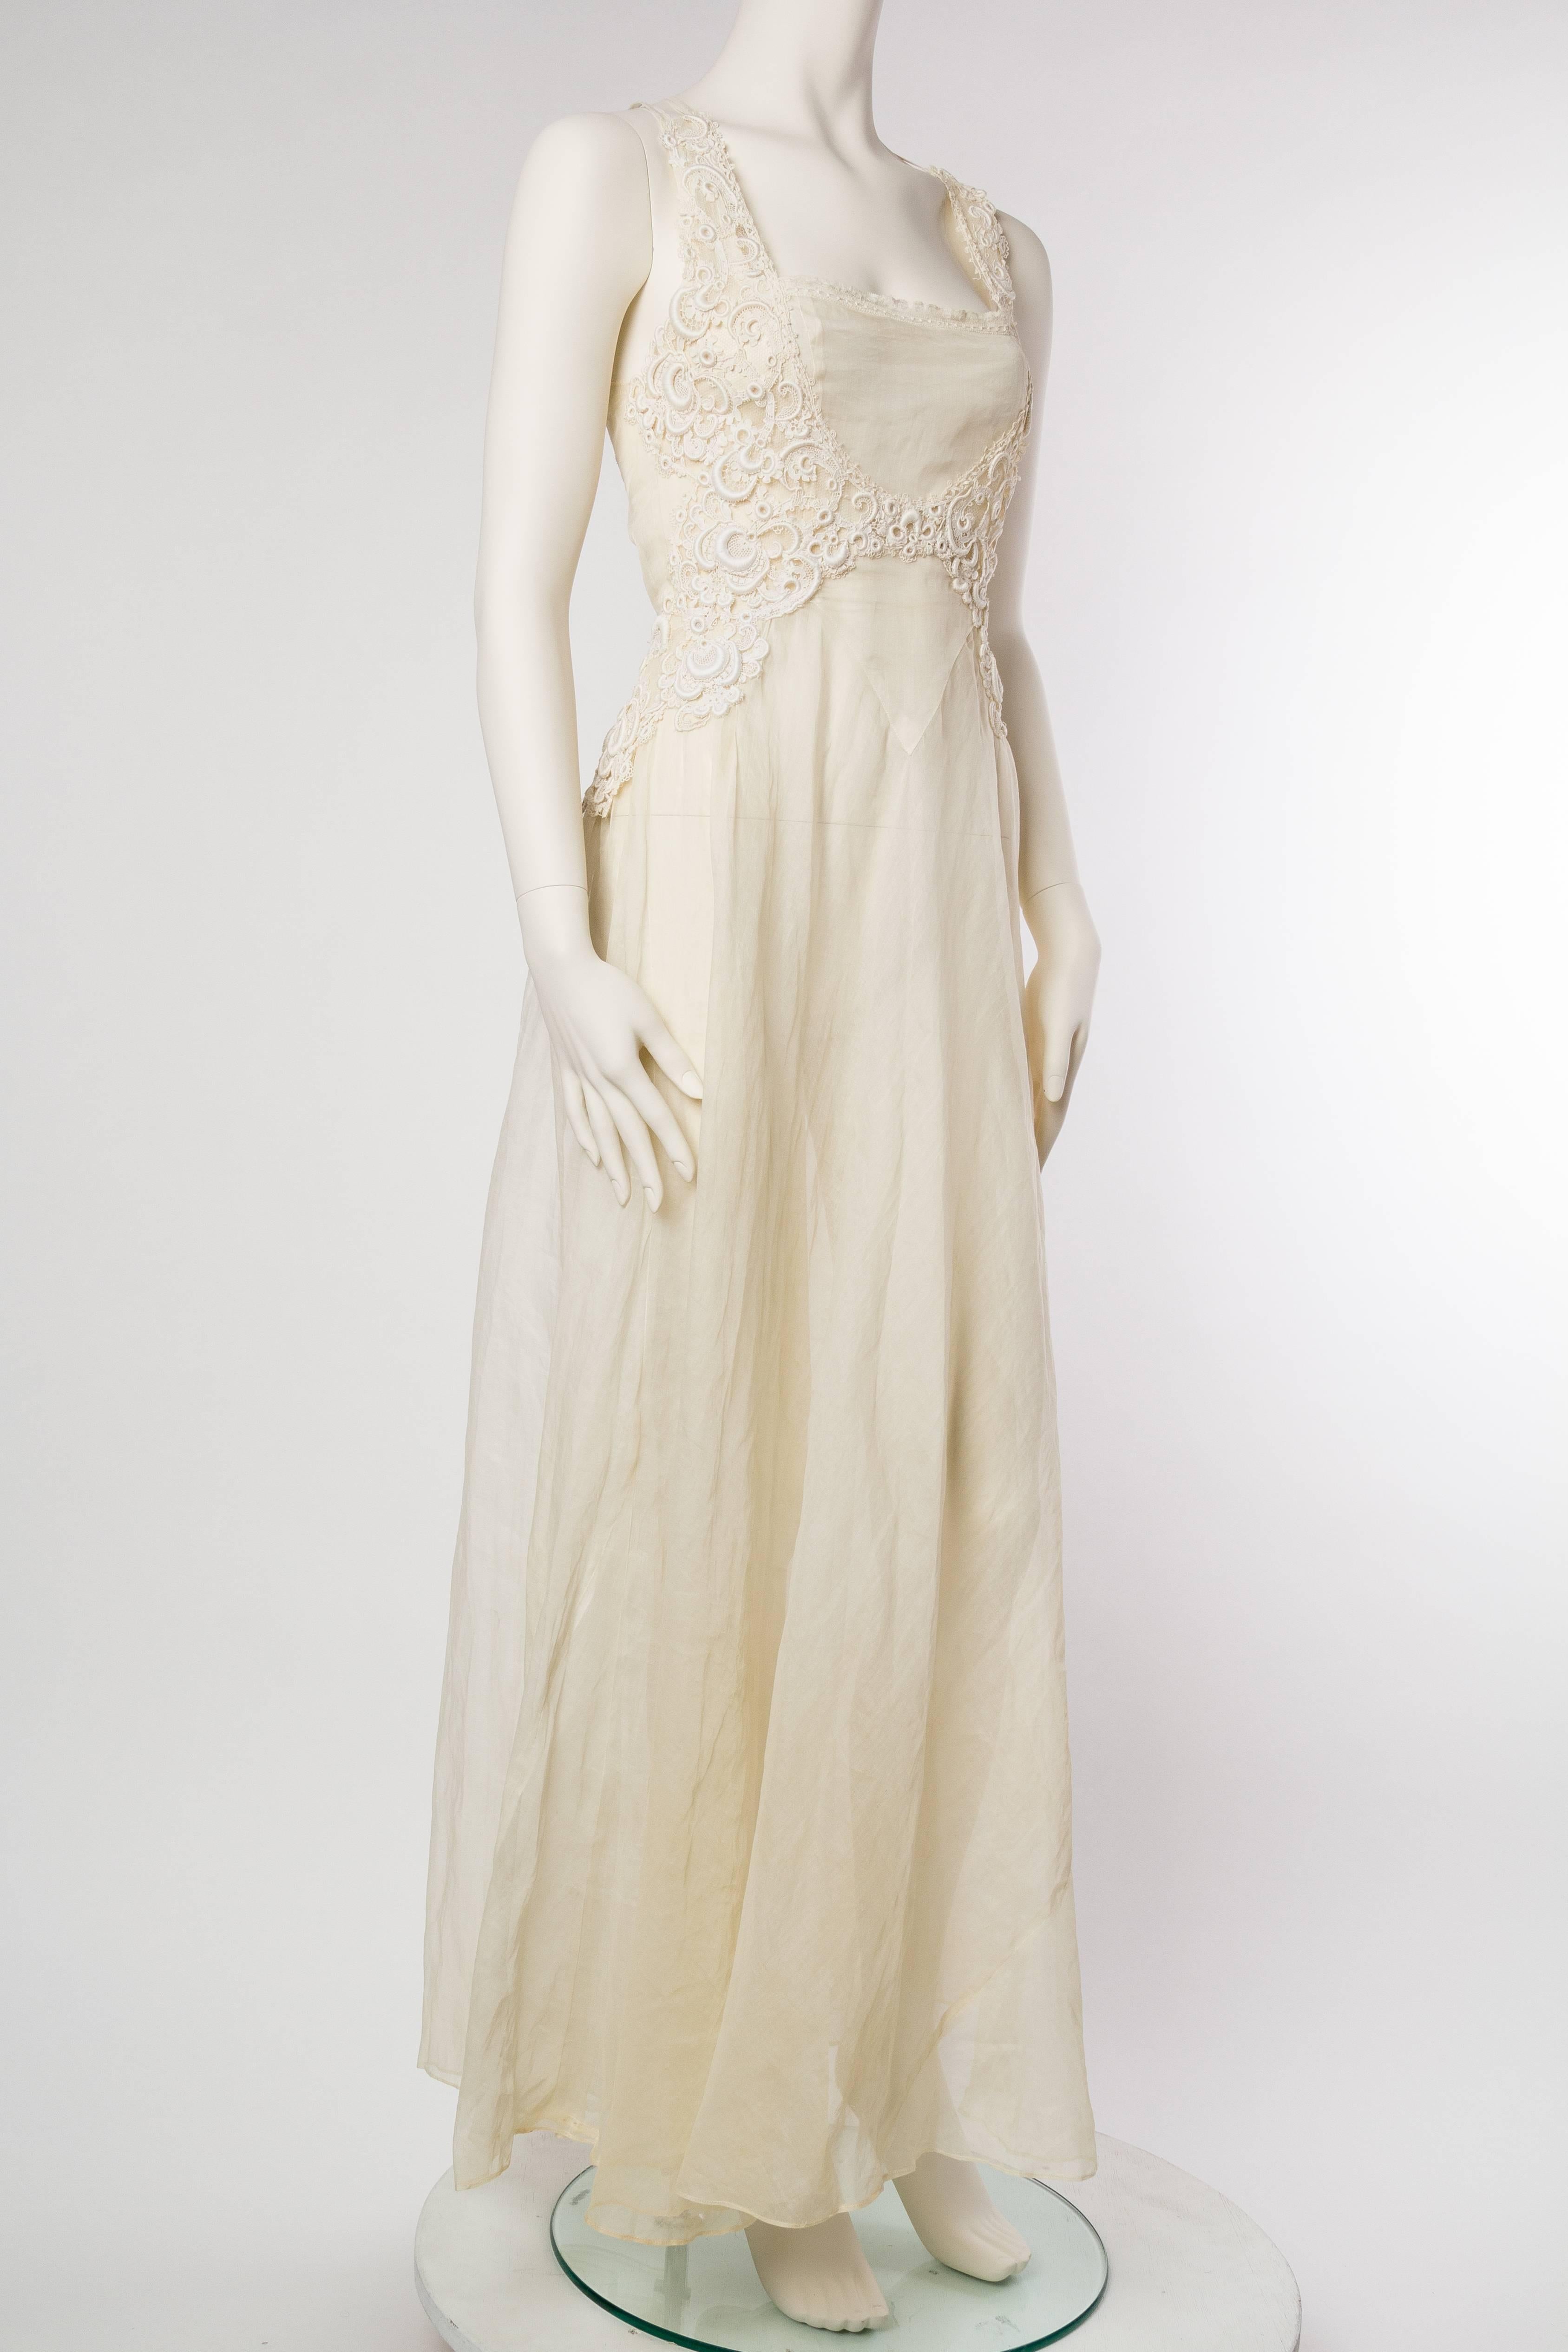 Beige Alexander McQueen Inspired re-worked 1930s Lace Dress